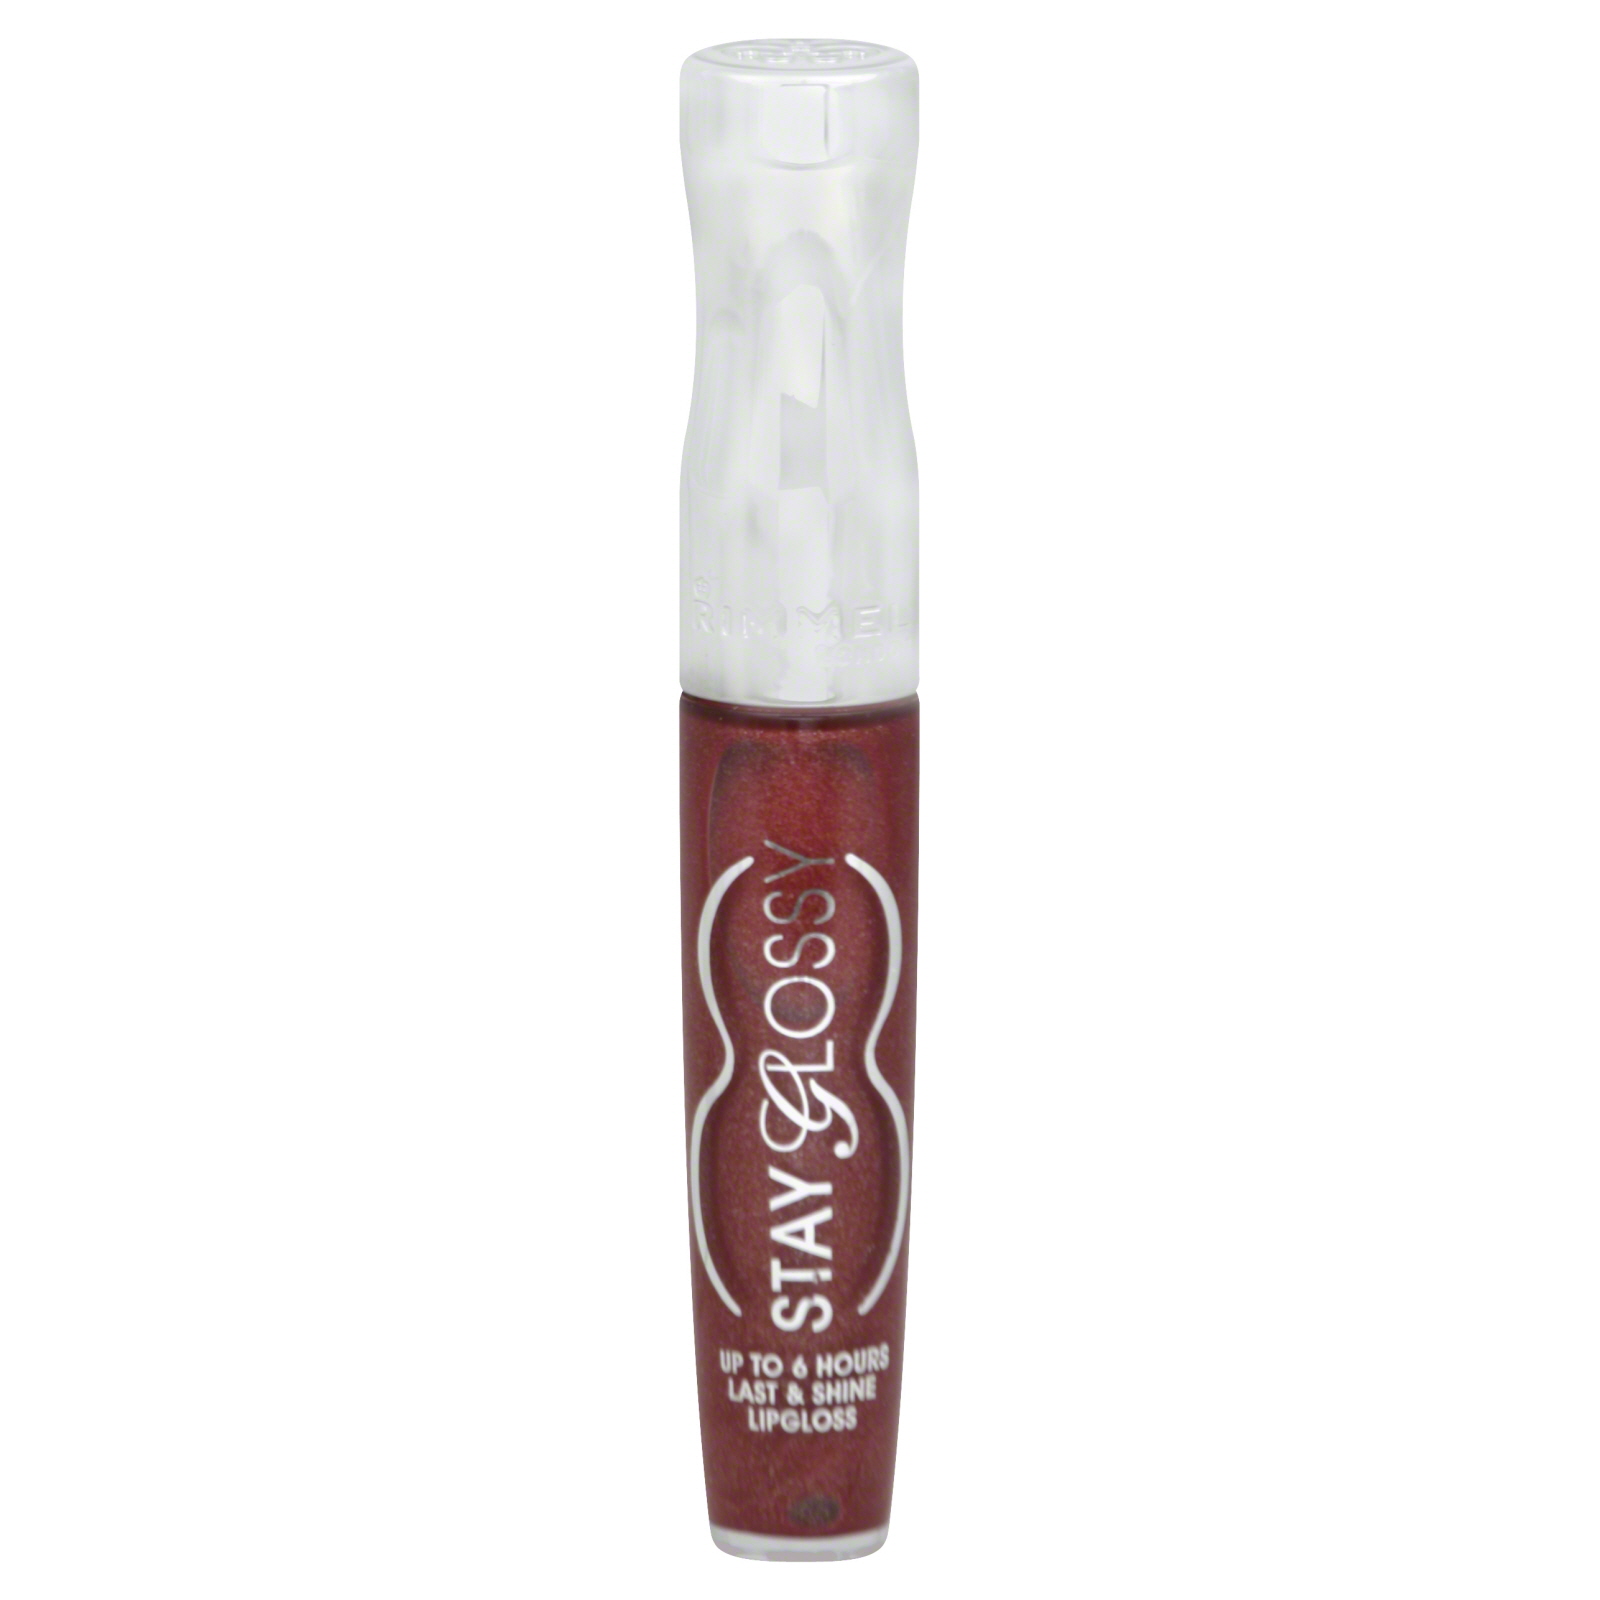 Rimmel Stay Glossy Lipgloss, All Night Long 430, 0.18 fl oz (5.5 ml)